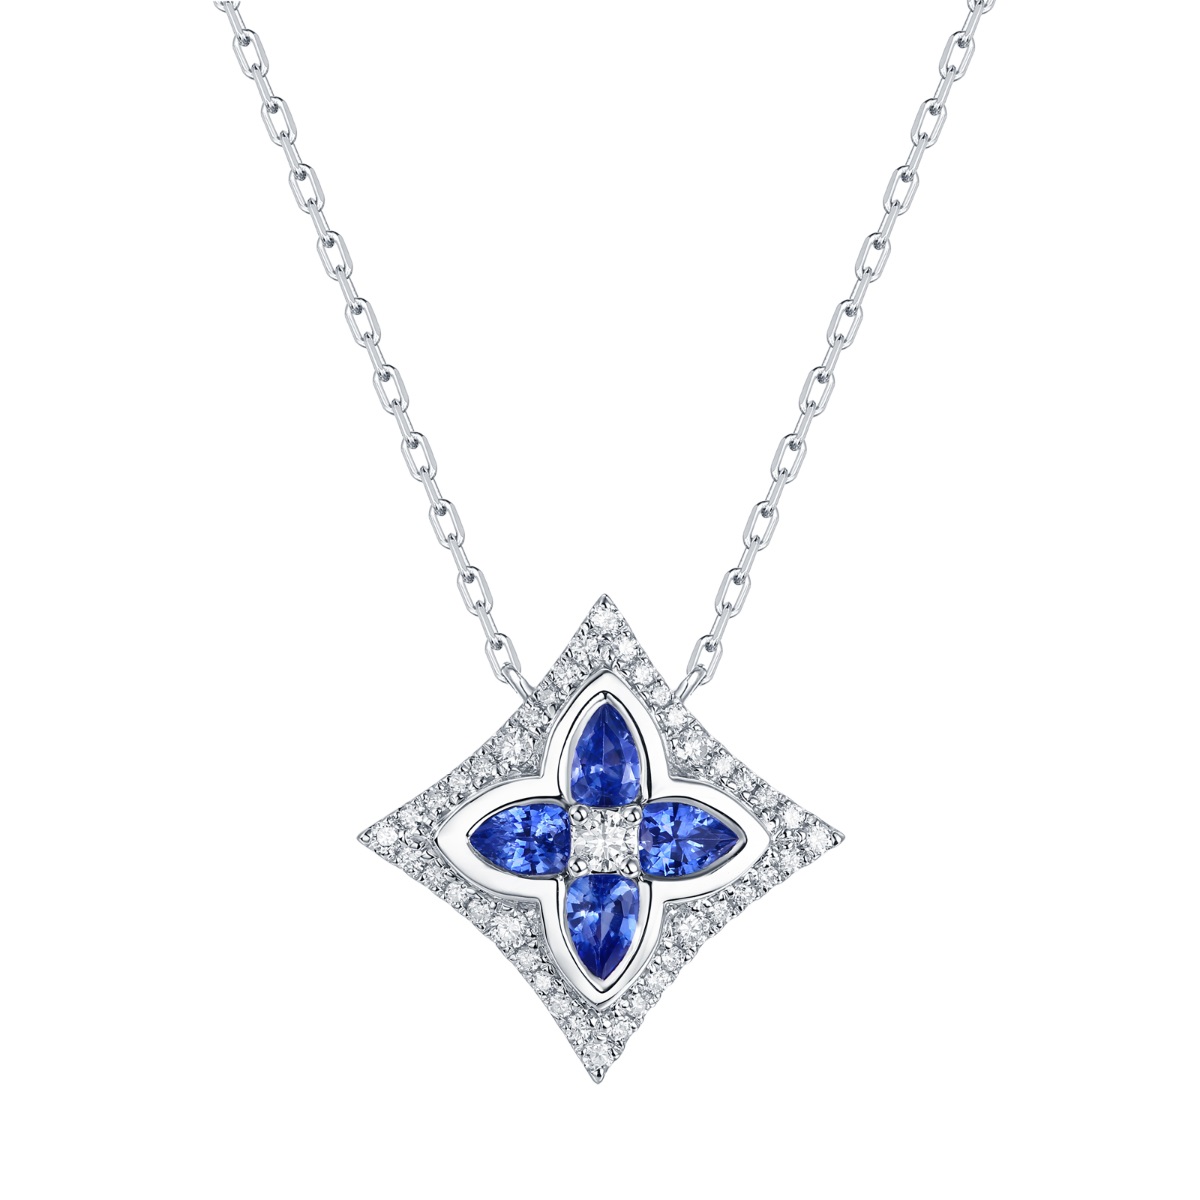 NL36381WBS – 18K White Gold  Diamond and Gemstone Necklace, 0.98 TCW